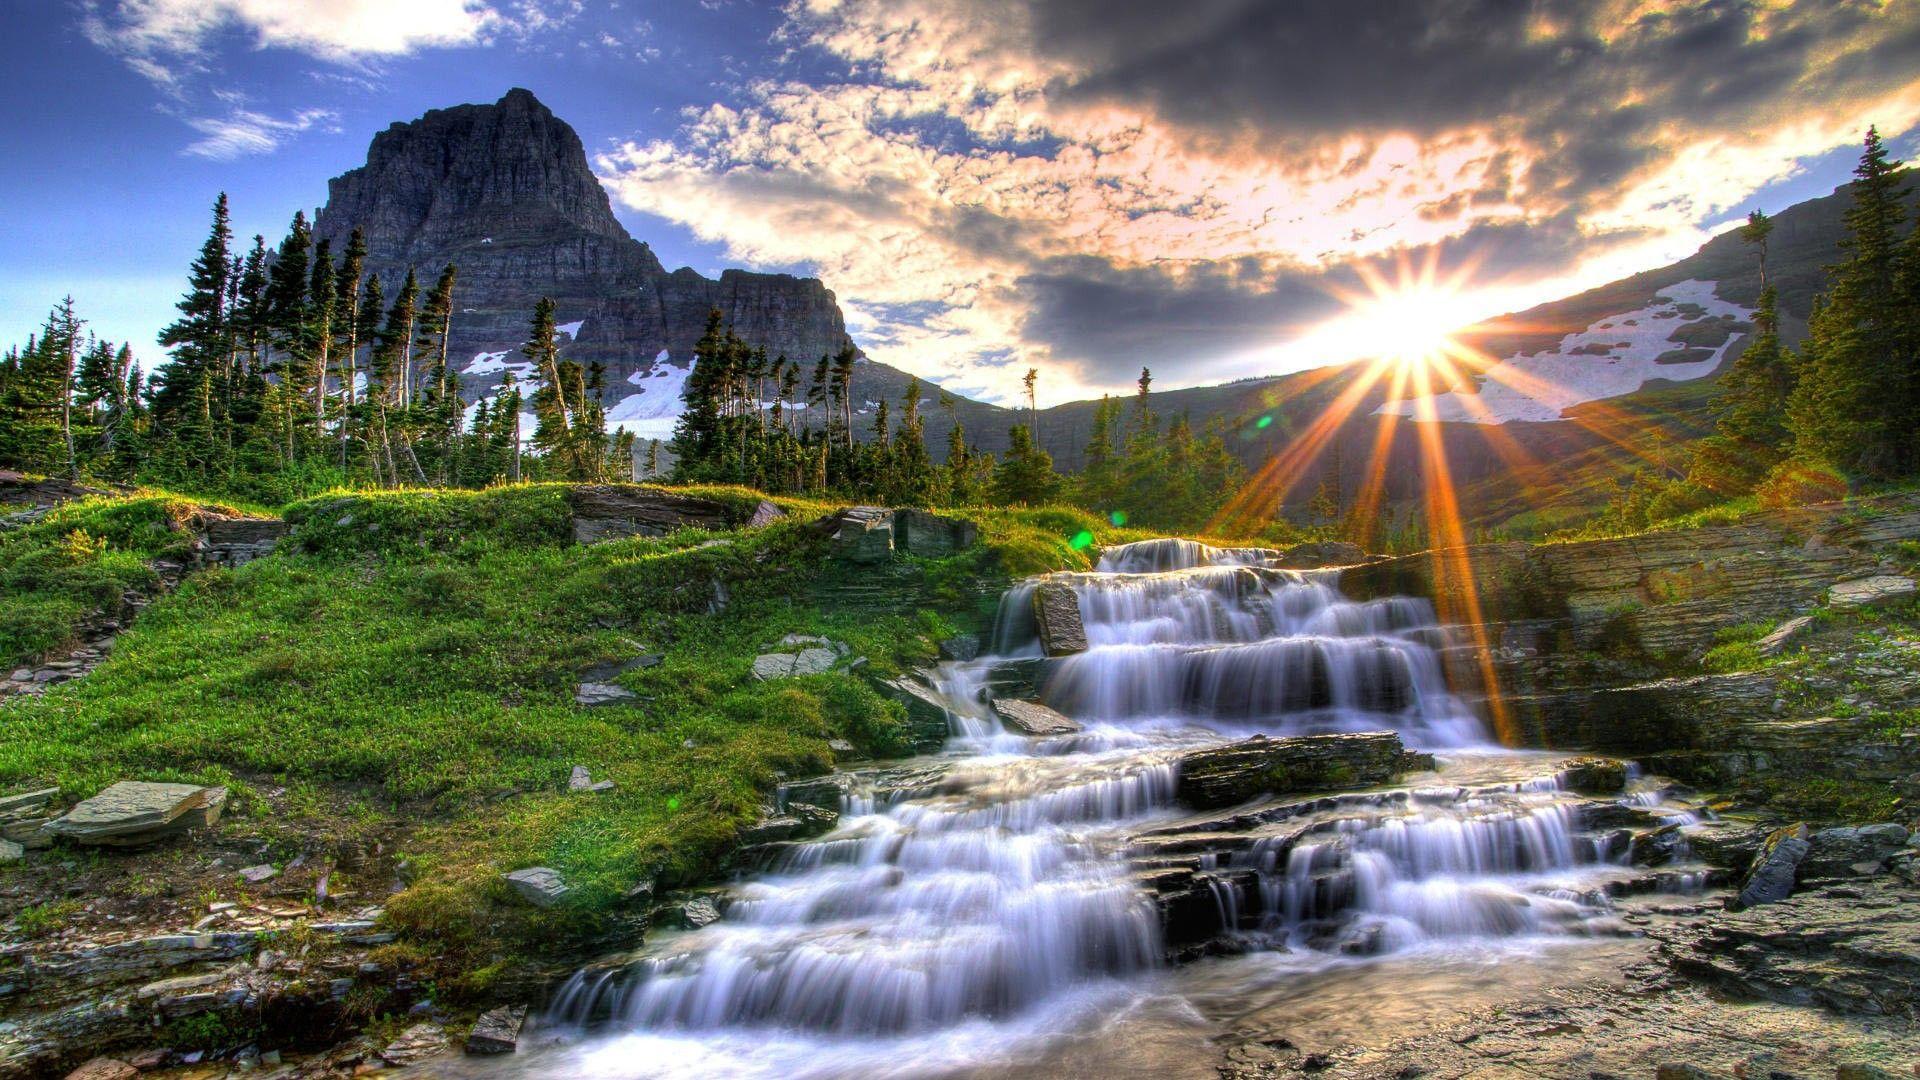 Full HD Waterfall Nature Landscape Wallpaper For Mobile Sunshine